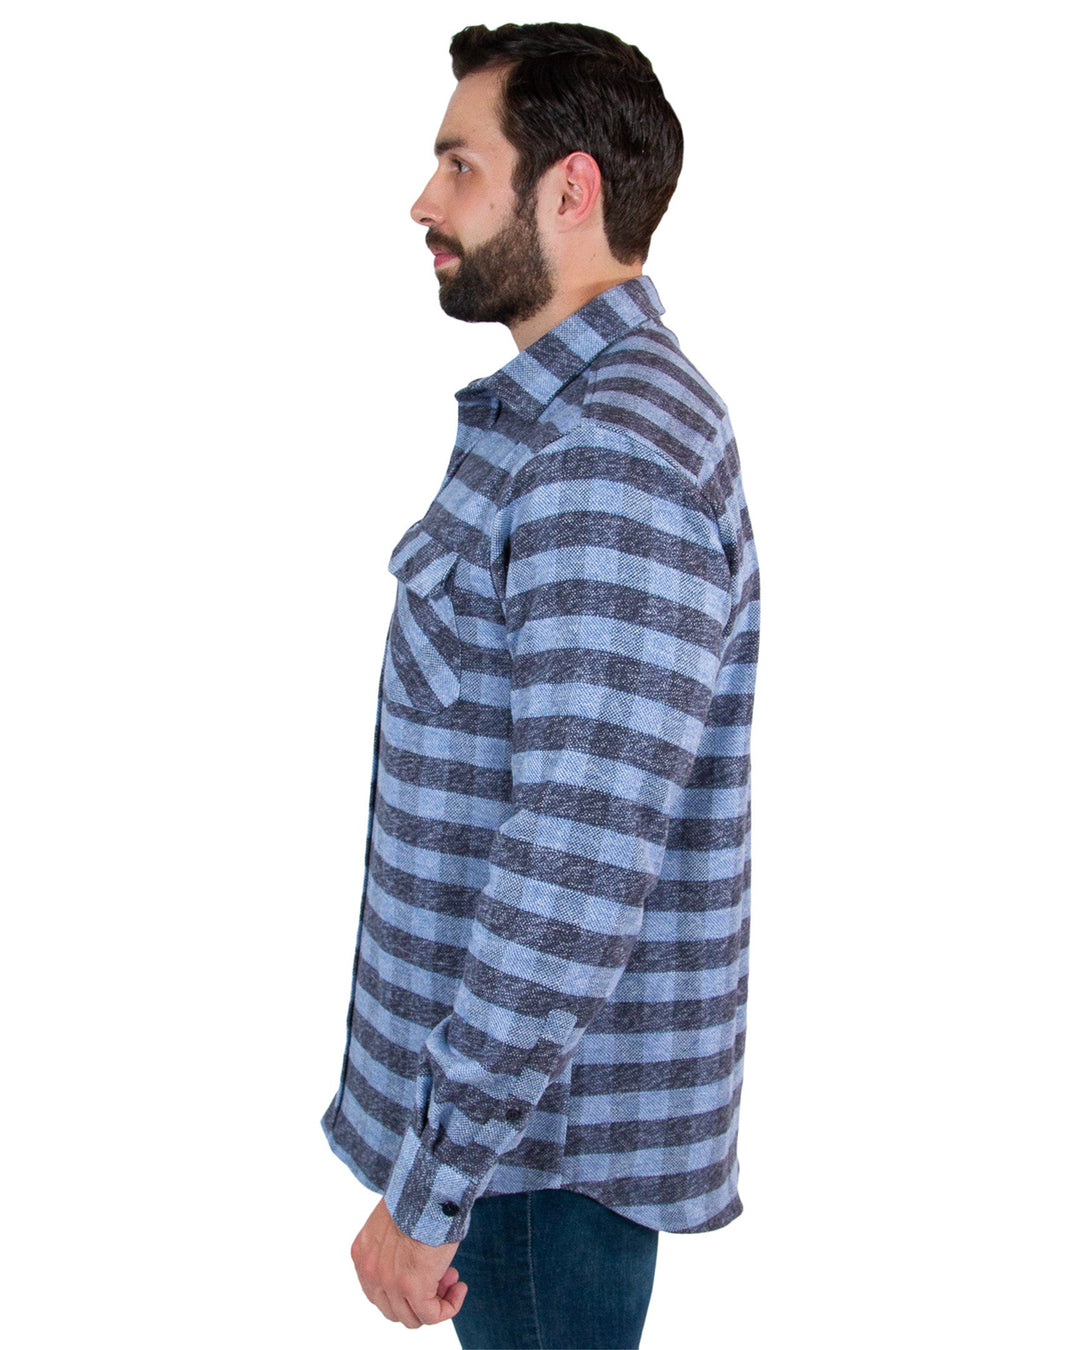 Grand Flannel in Cadet Blue, 100% Cotton Flannel Shirt for Men